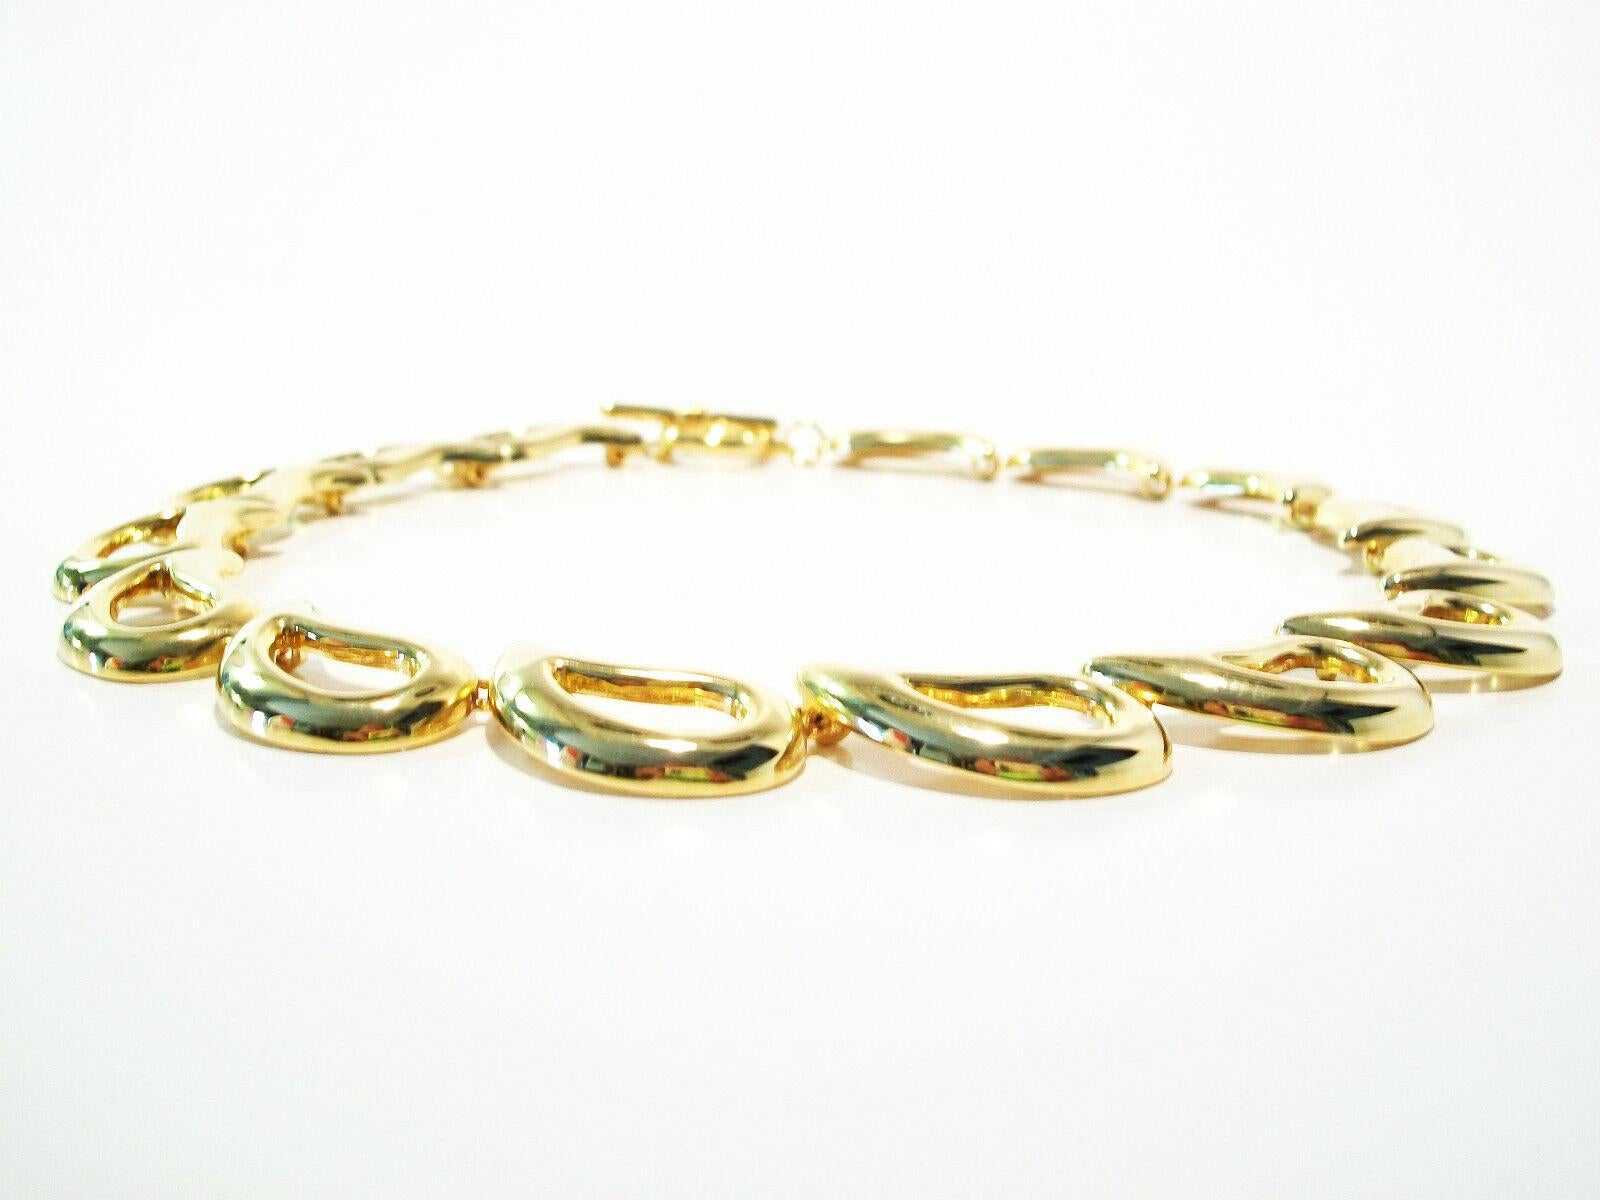 Vintage Gold Tone Teardrop Design Necklace - Toggle Closure - Unsigned - C. 1980 For Sale 1